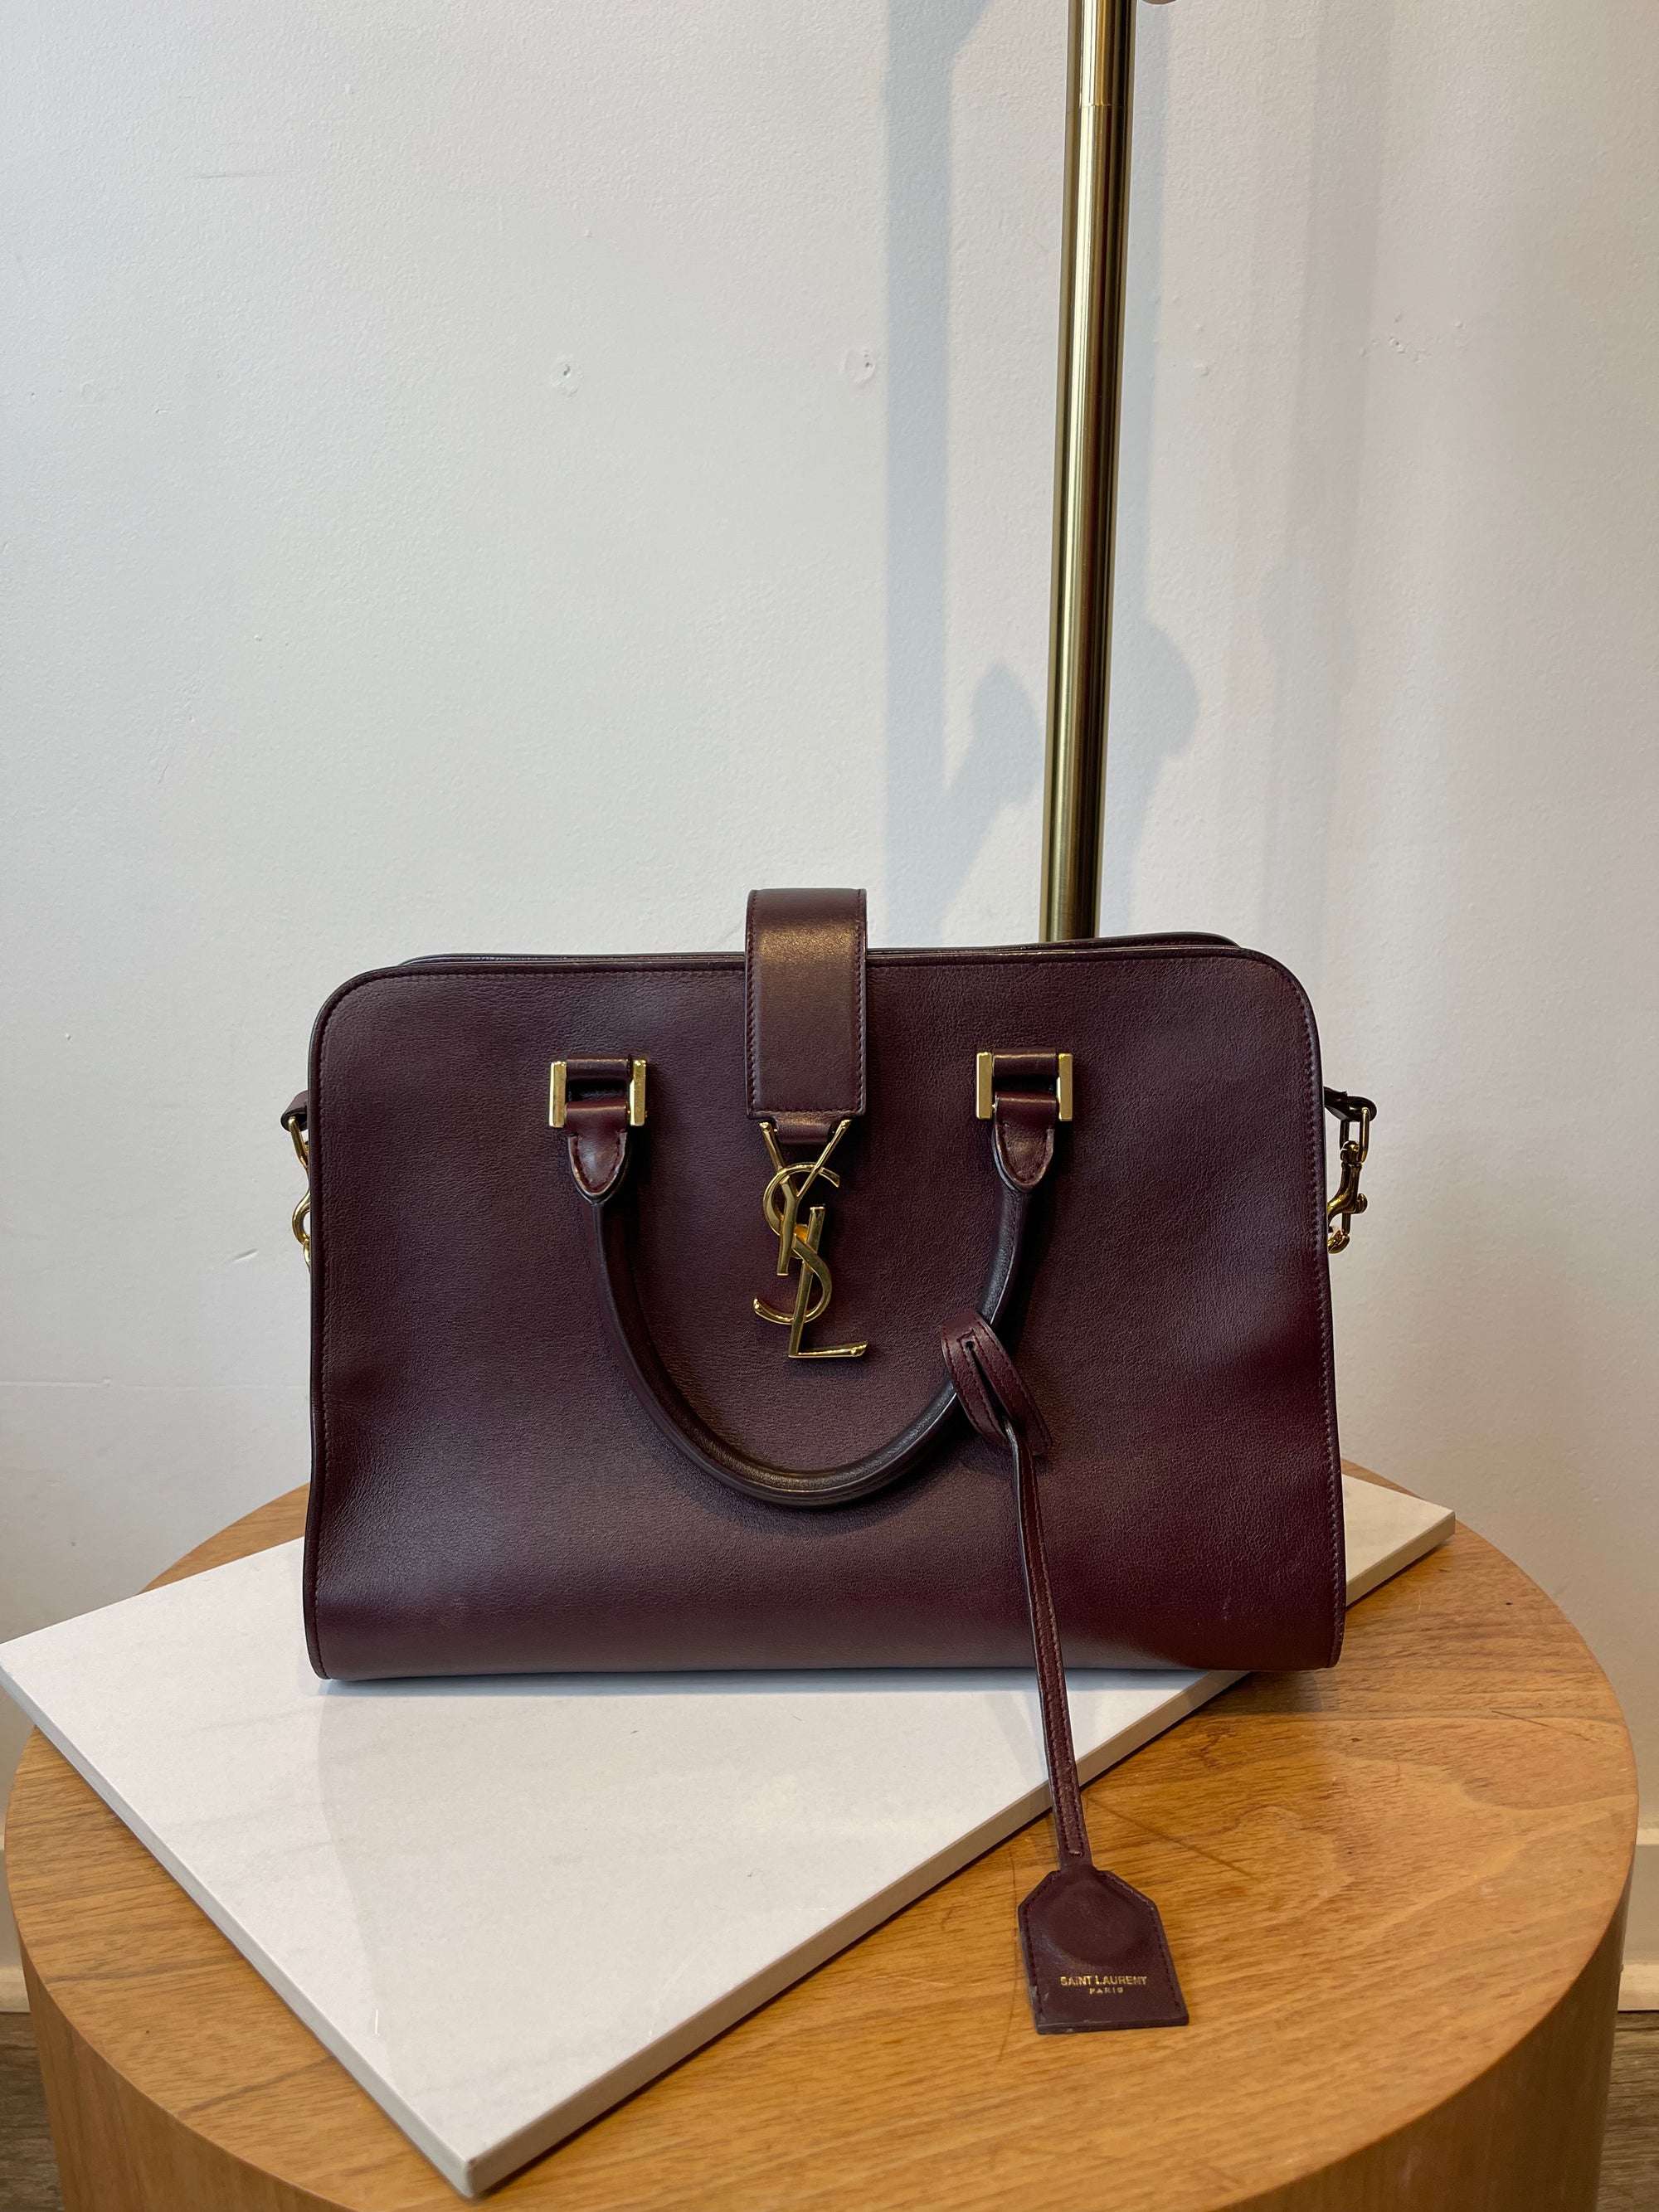 Yves Saint Laurent Cabas Tote Handbags Burgundy